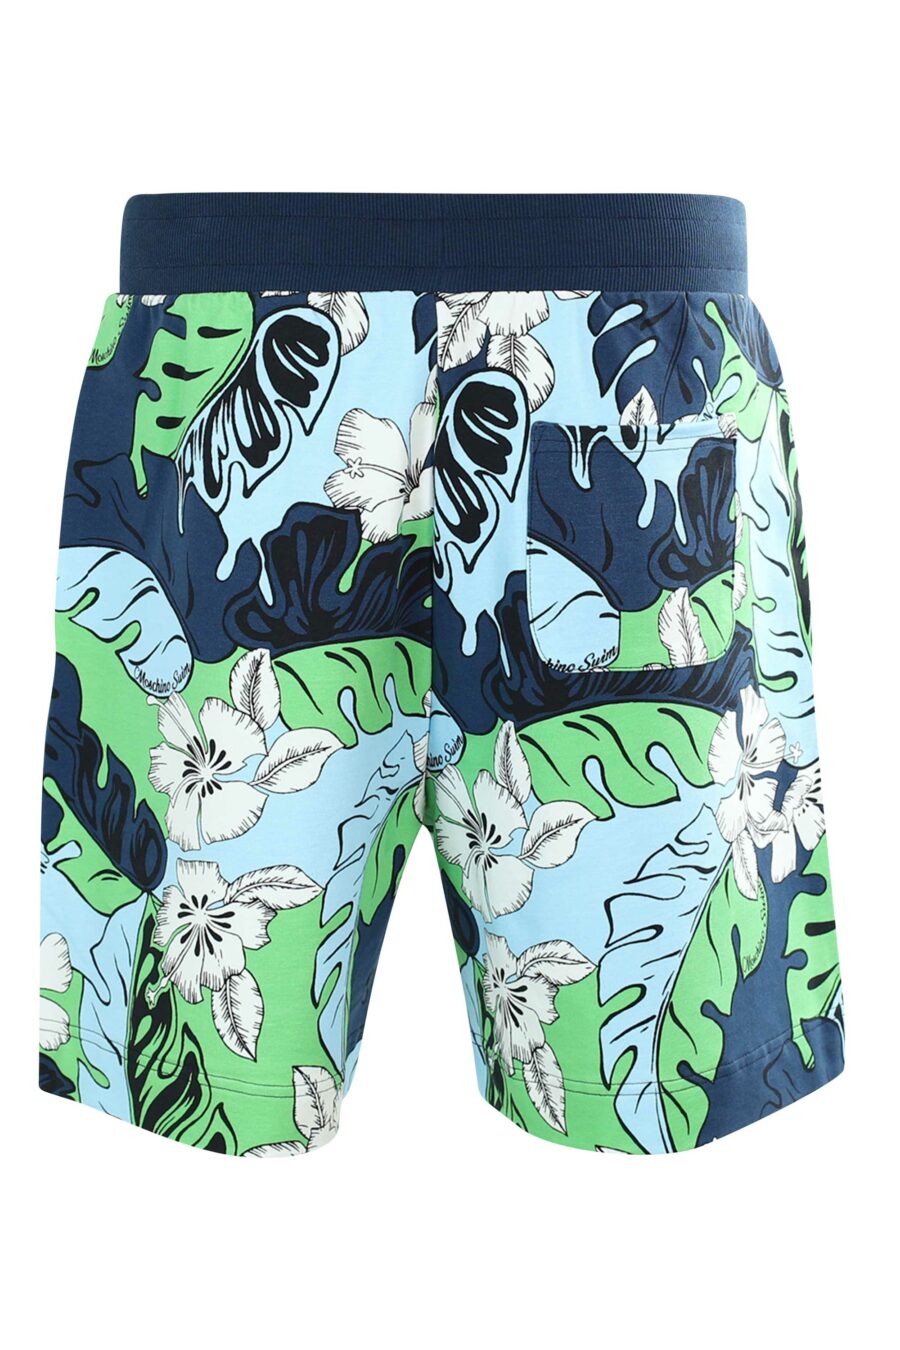 Blaue Midi-Shorts mit mehrfarbigem Dschungelblatt-Print - 889316293173 2